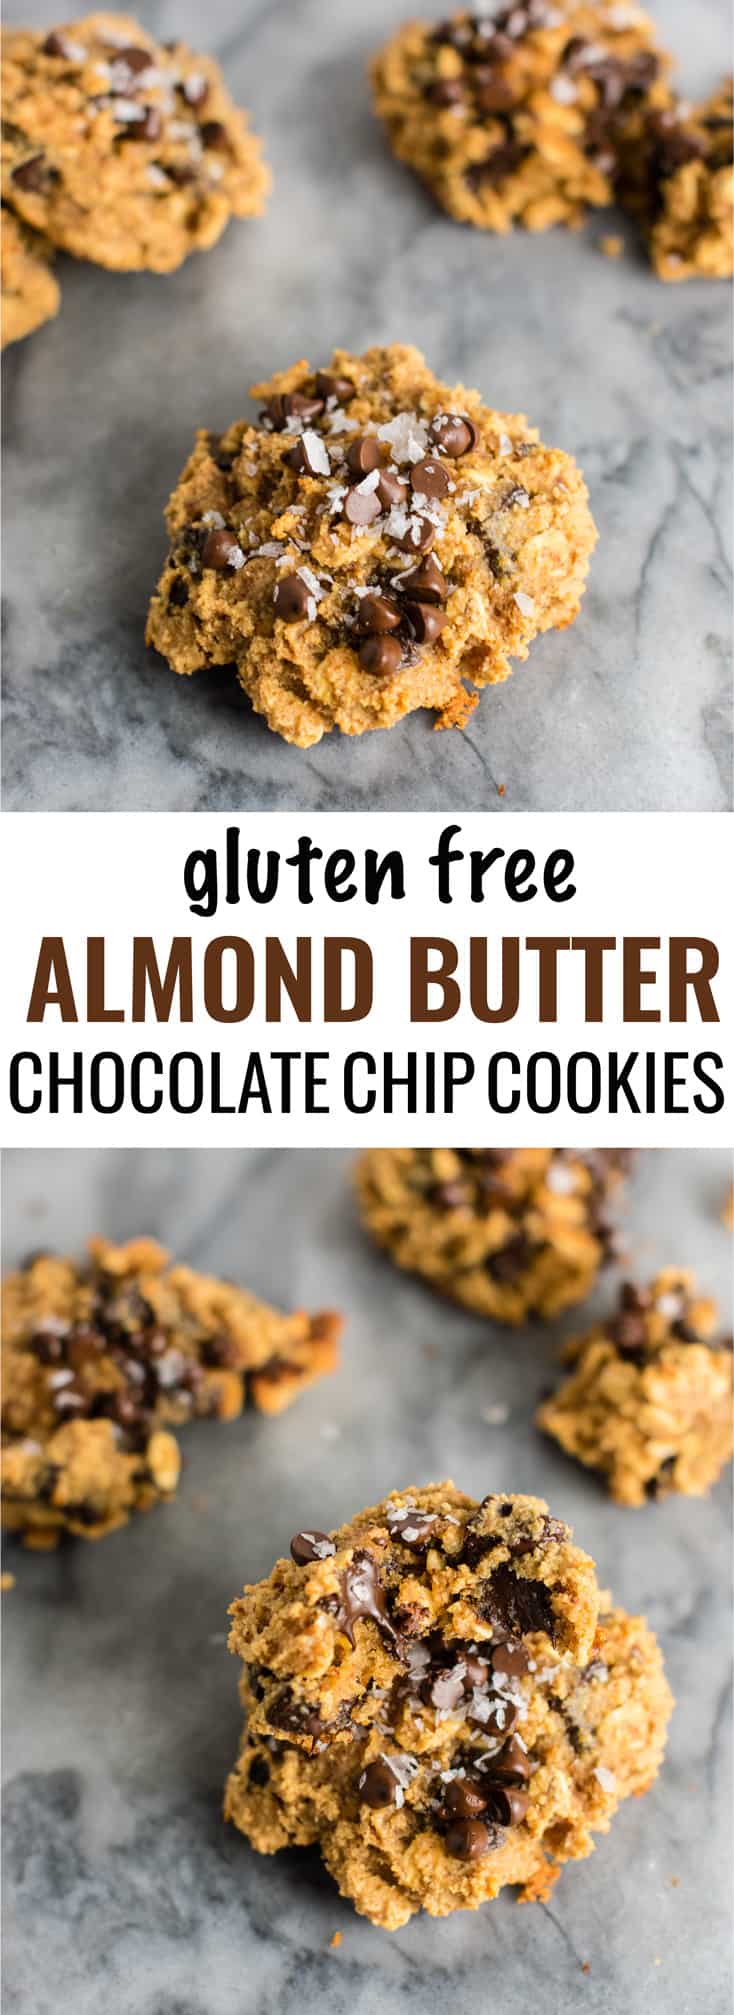 Gluten free almond butter chocolate chip cookies with sea salt. #healthy #dessert #glutenfree #almondbutter #healthydessert